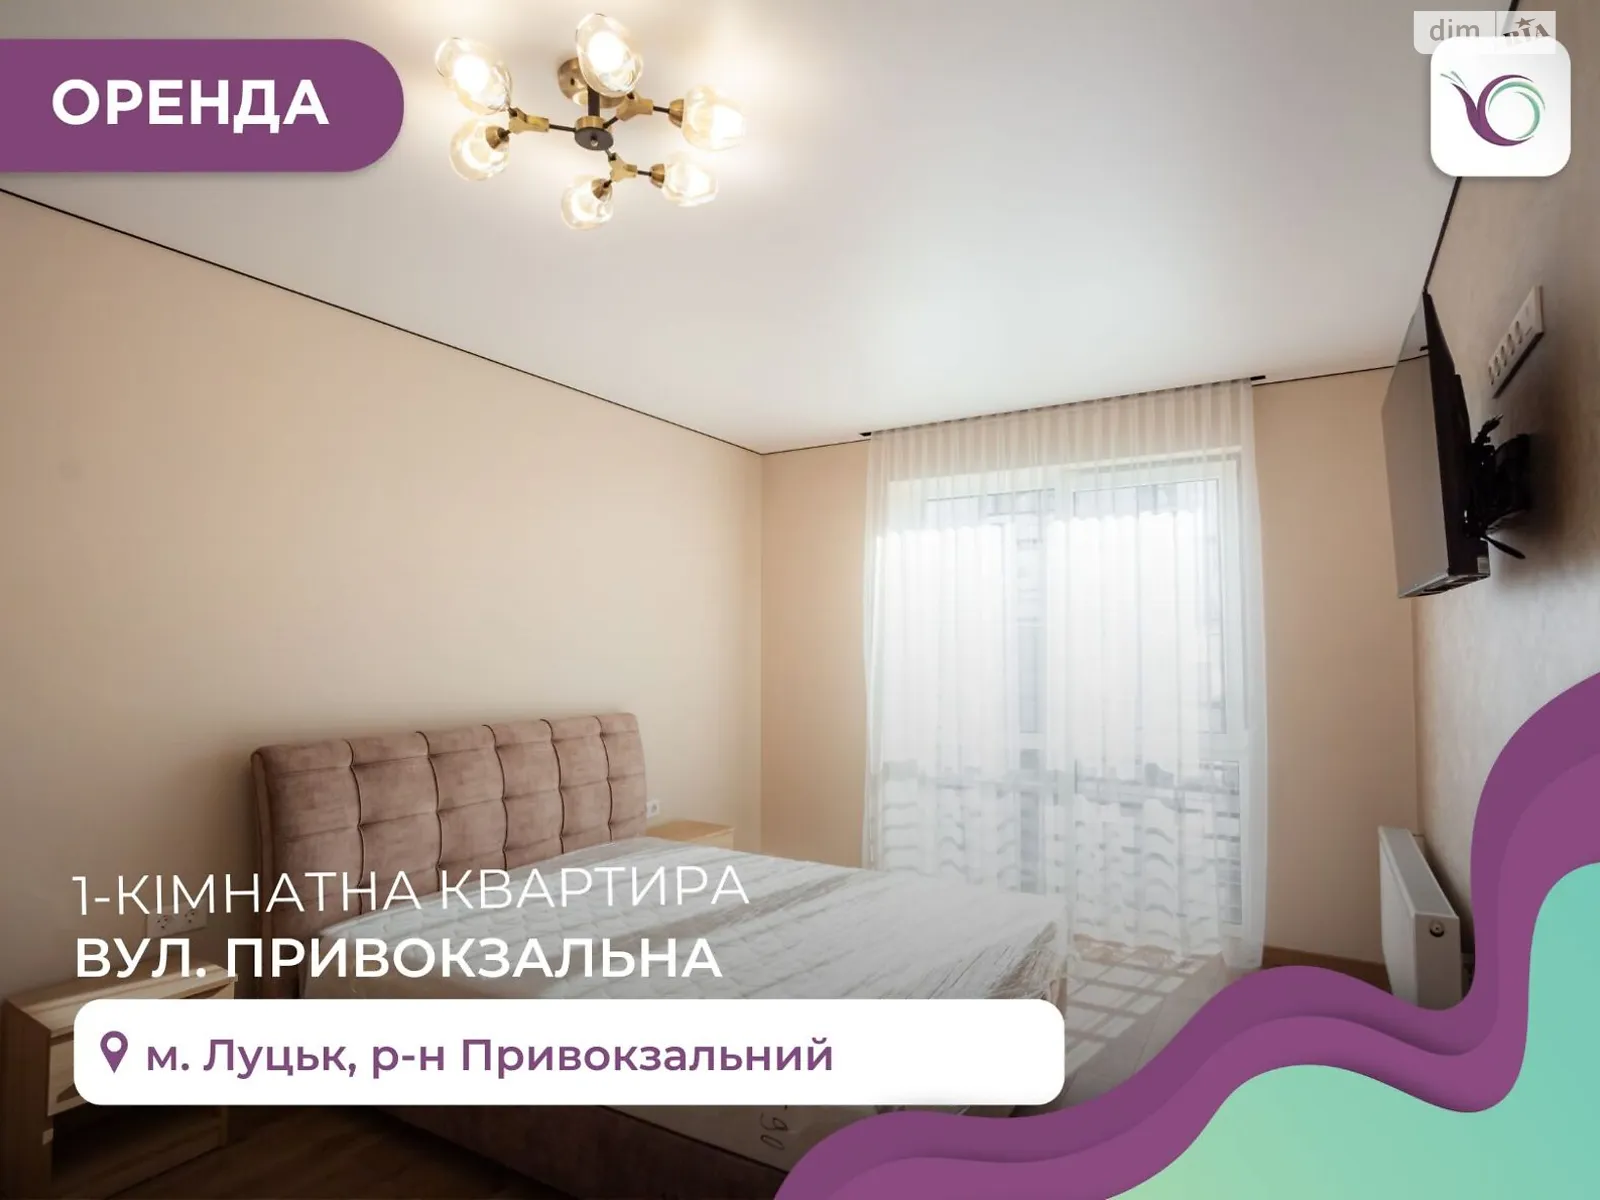 1-кімнатна квартира 50 кв. м у Луцьку, цена: 16000 грн